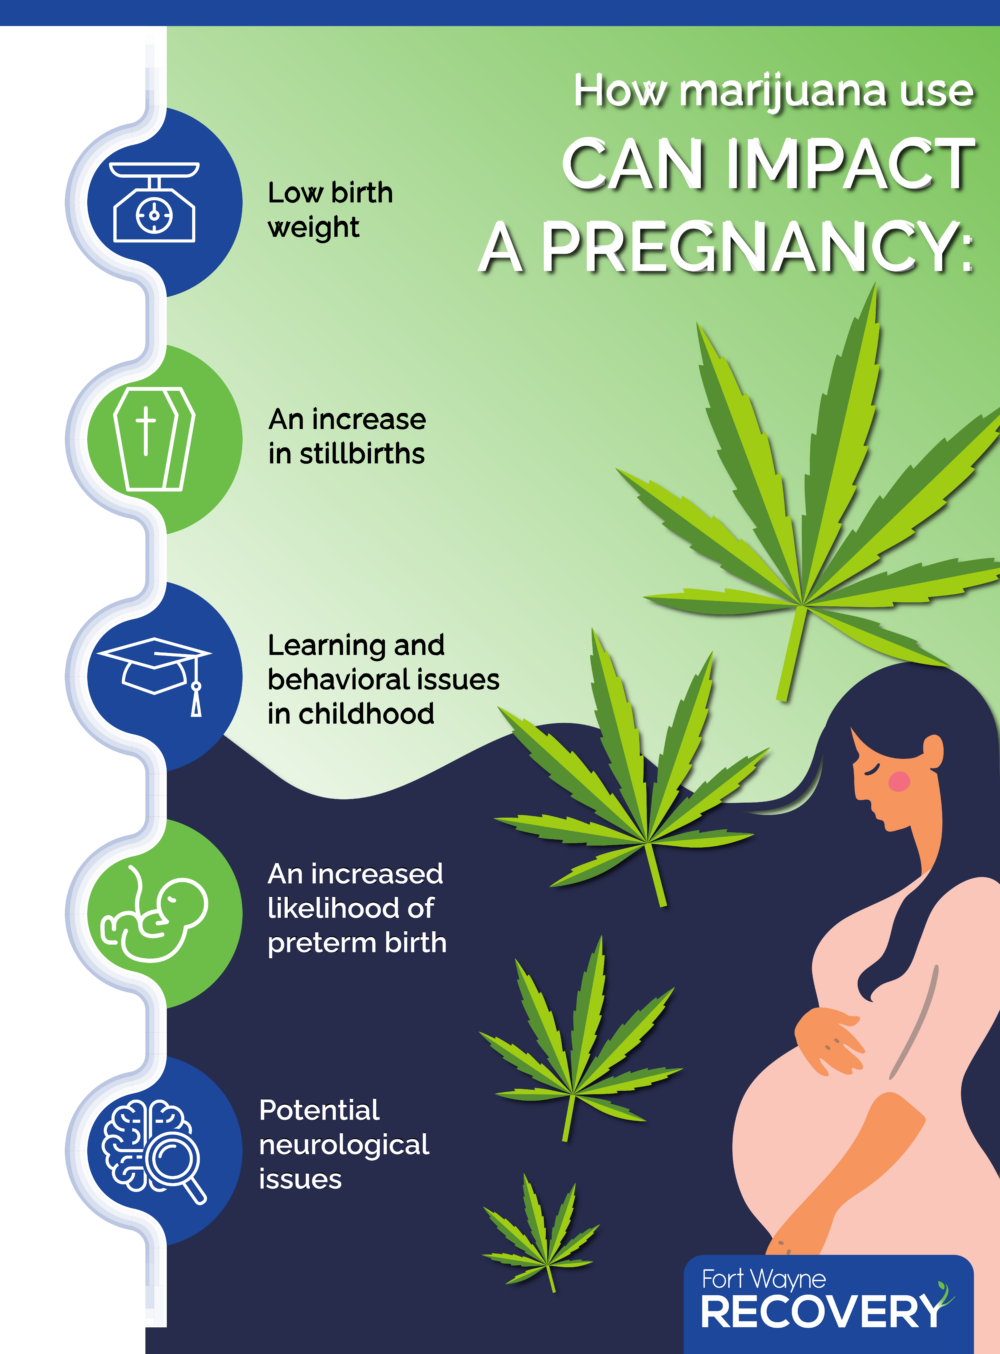 Marijuana Use During Pregnancy Infographic Fort Wayne Treatment Fort Wayne, Indiana